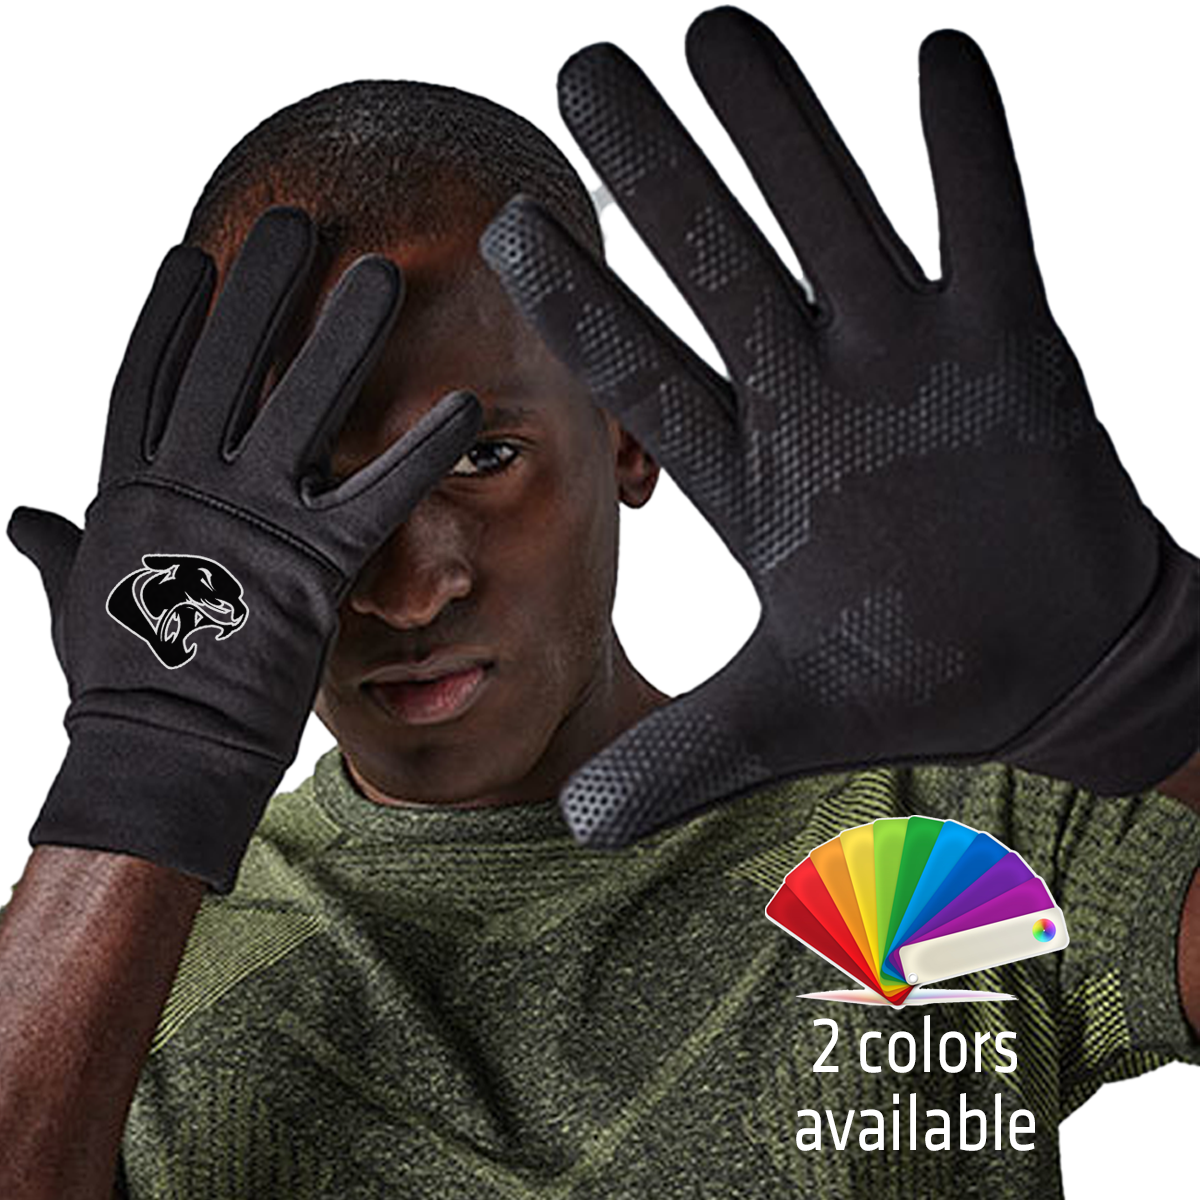 Cougars K.Tech-Fiber Softshell Gloves